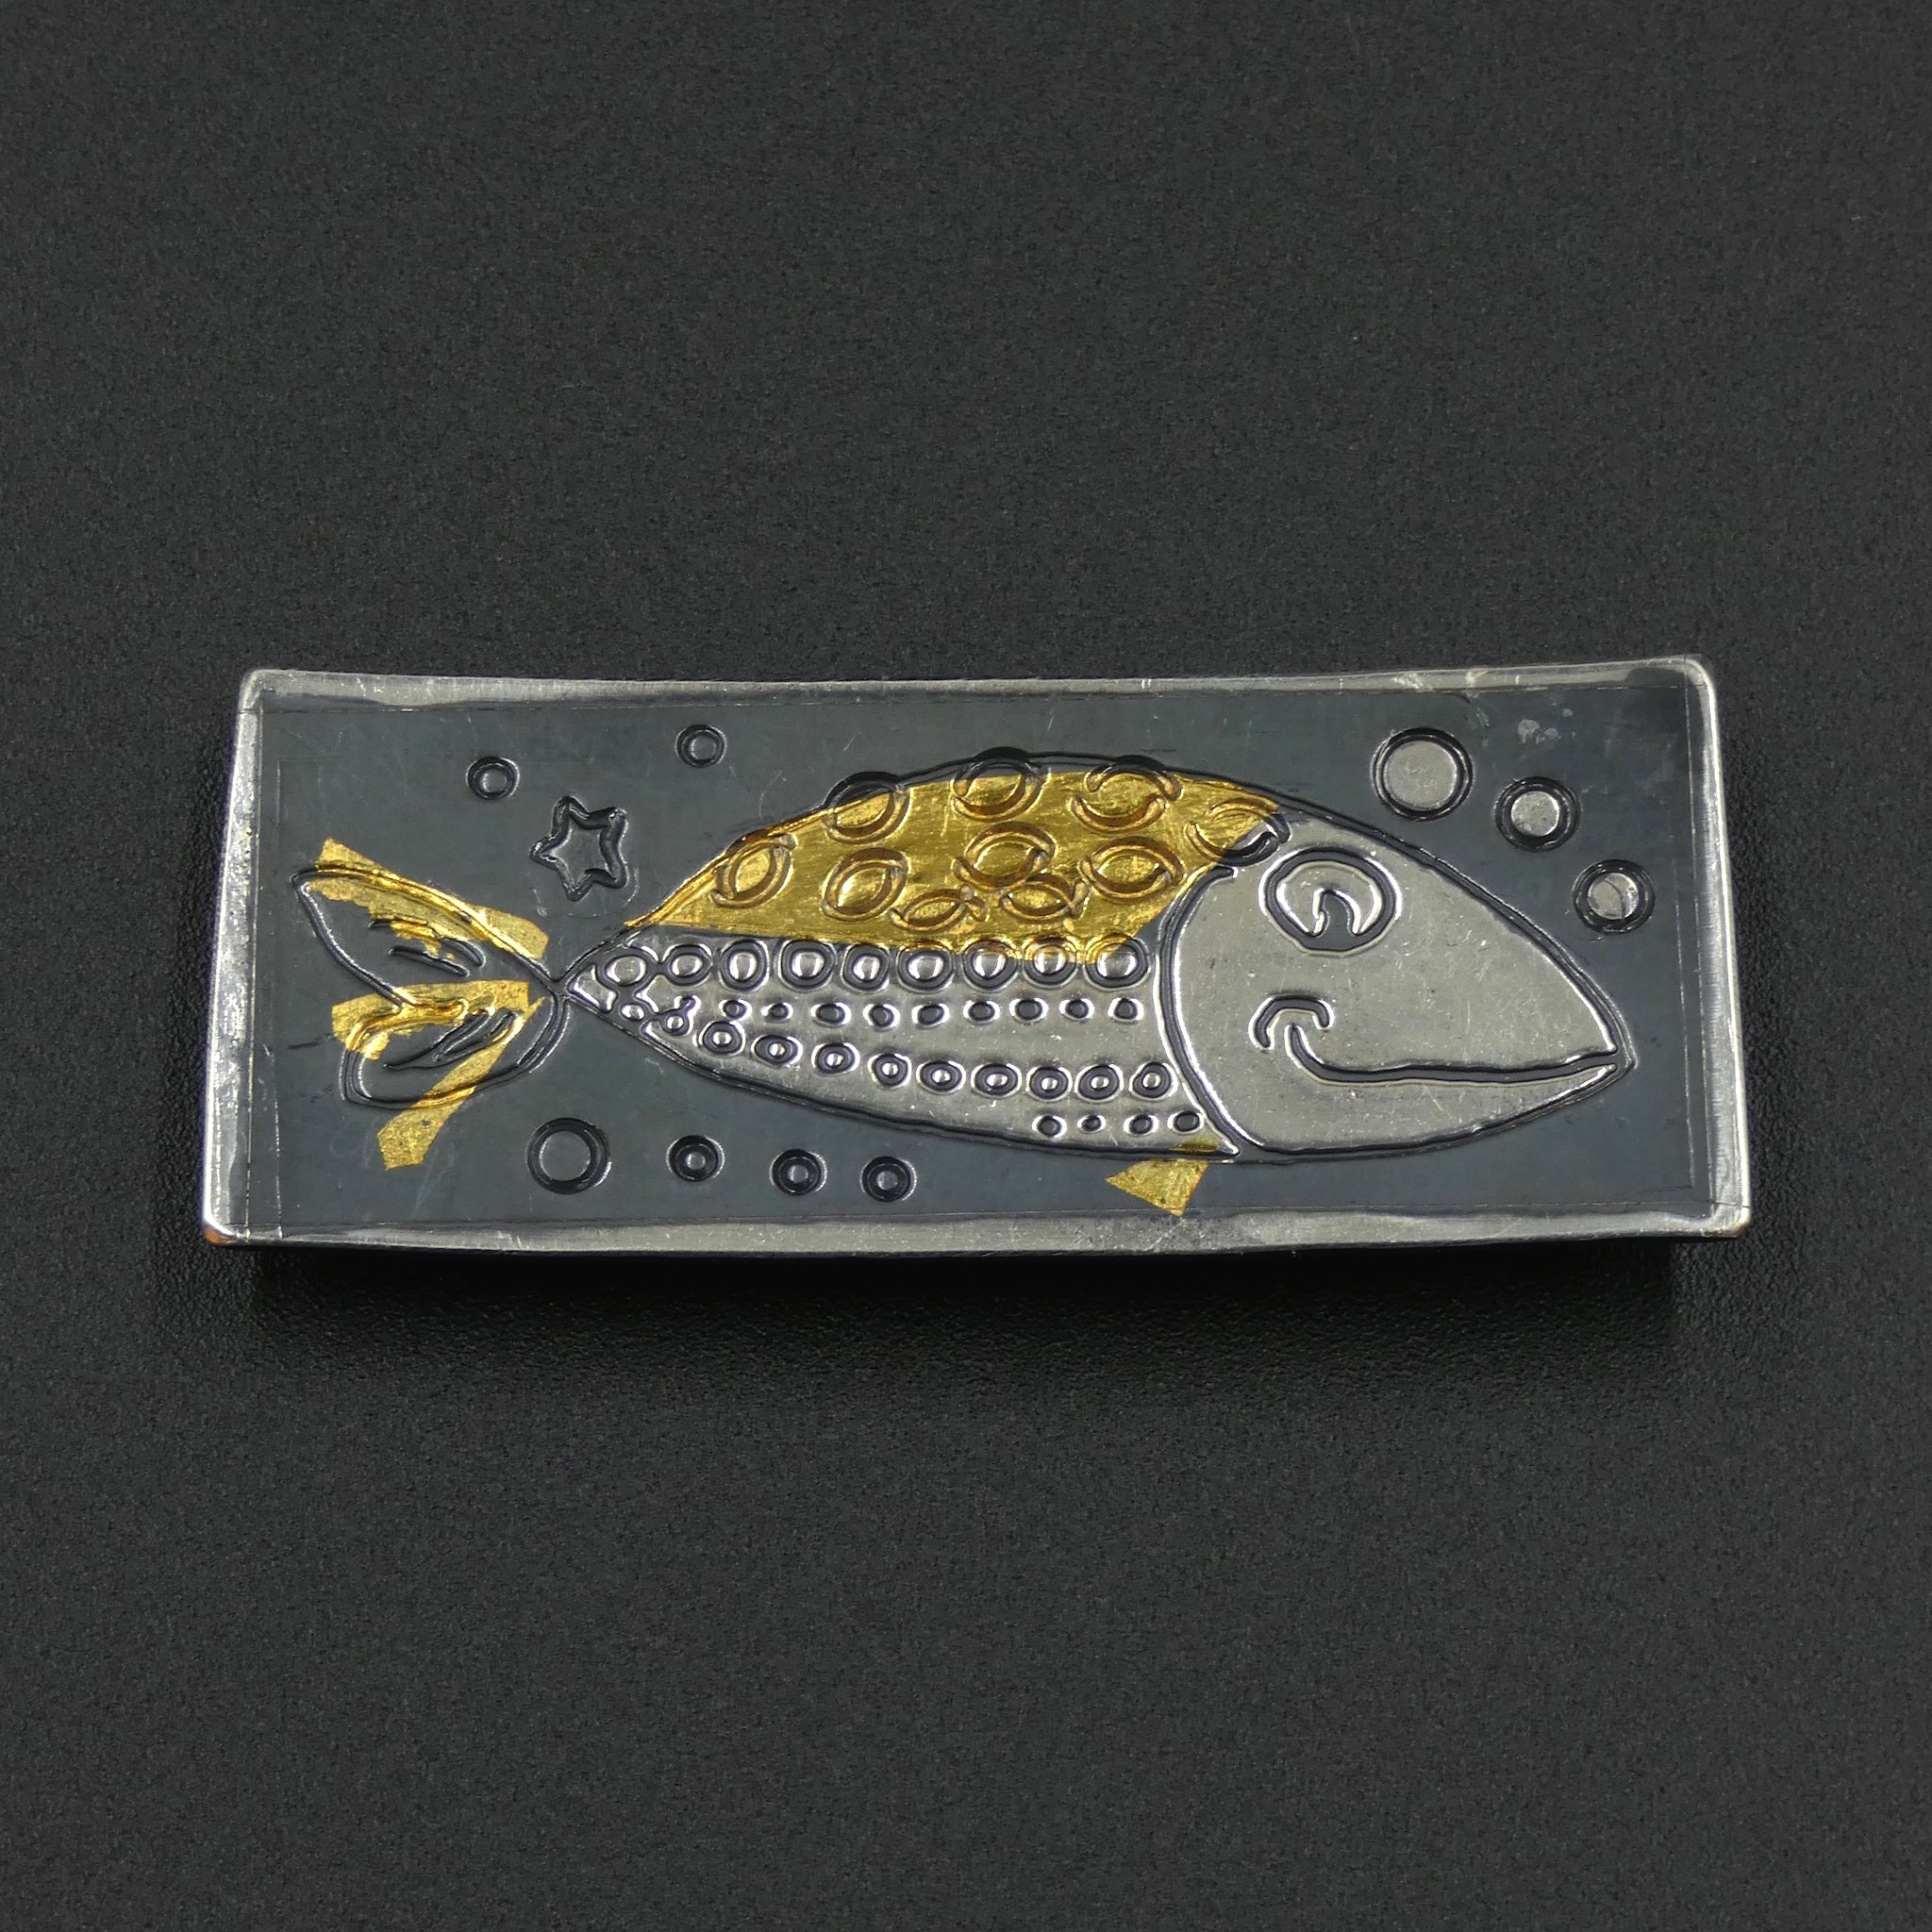 Fish brooch by jewellers John and Dawn Field